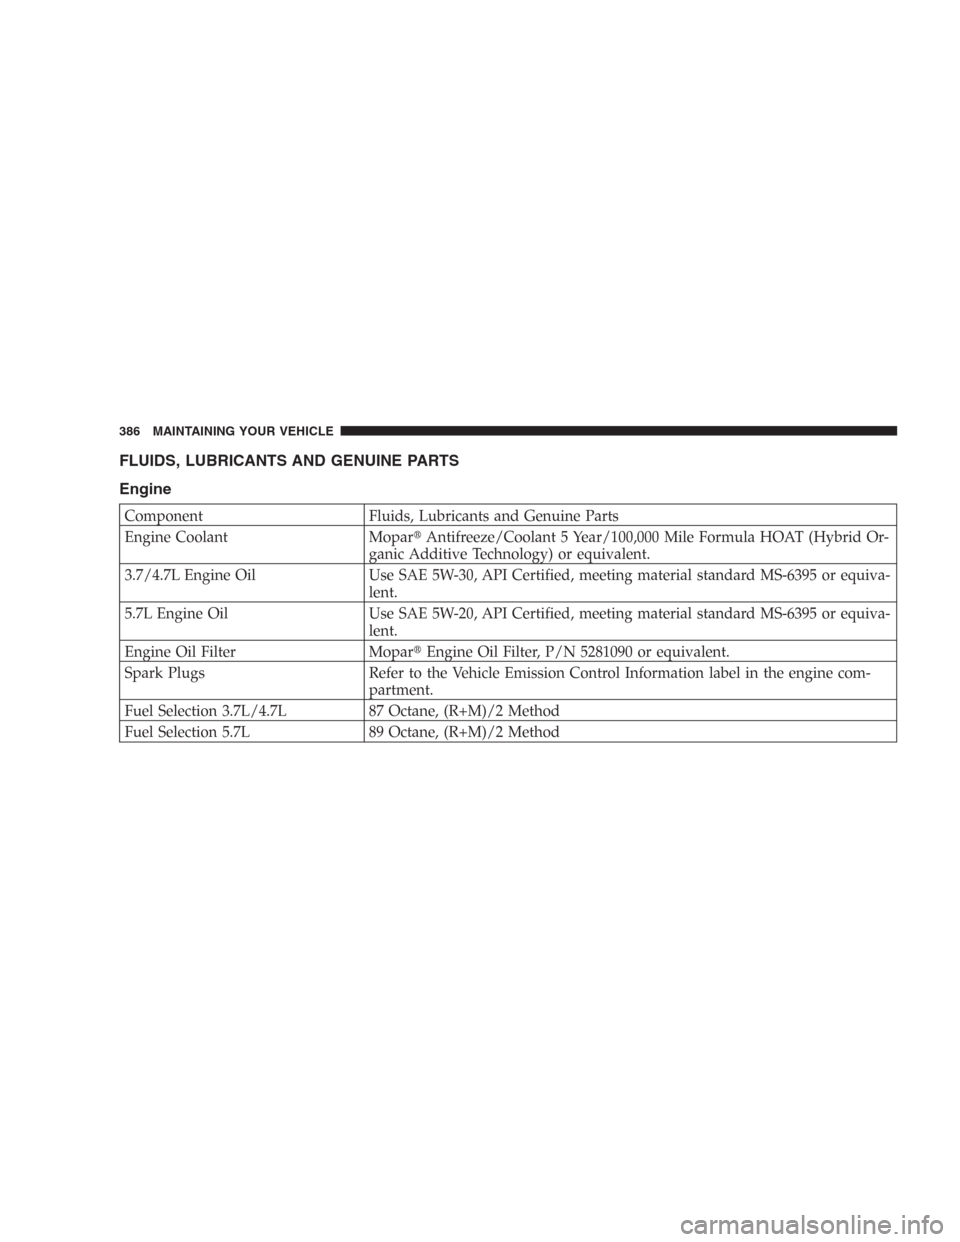 DODGE DURANGO 2006 2.G Owners Manual FLUIDS, LUBRICANTS AND GENUINE PARTS
Engine
Component Fluids, Lubricants and Genuine Parts
Engine Coolant MoparAntifreeze/Coolant 5 Year/100,000 Mile Formula HOAT (Hybrid Or-
ganic Additive Technolog